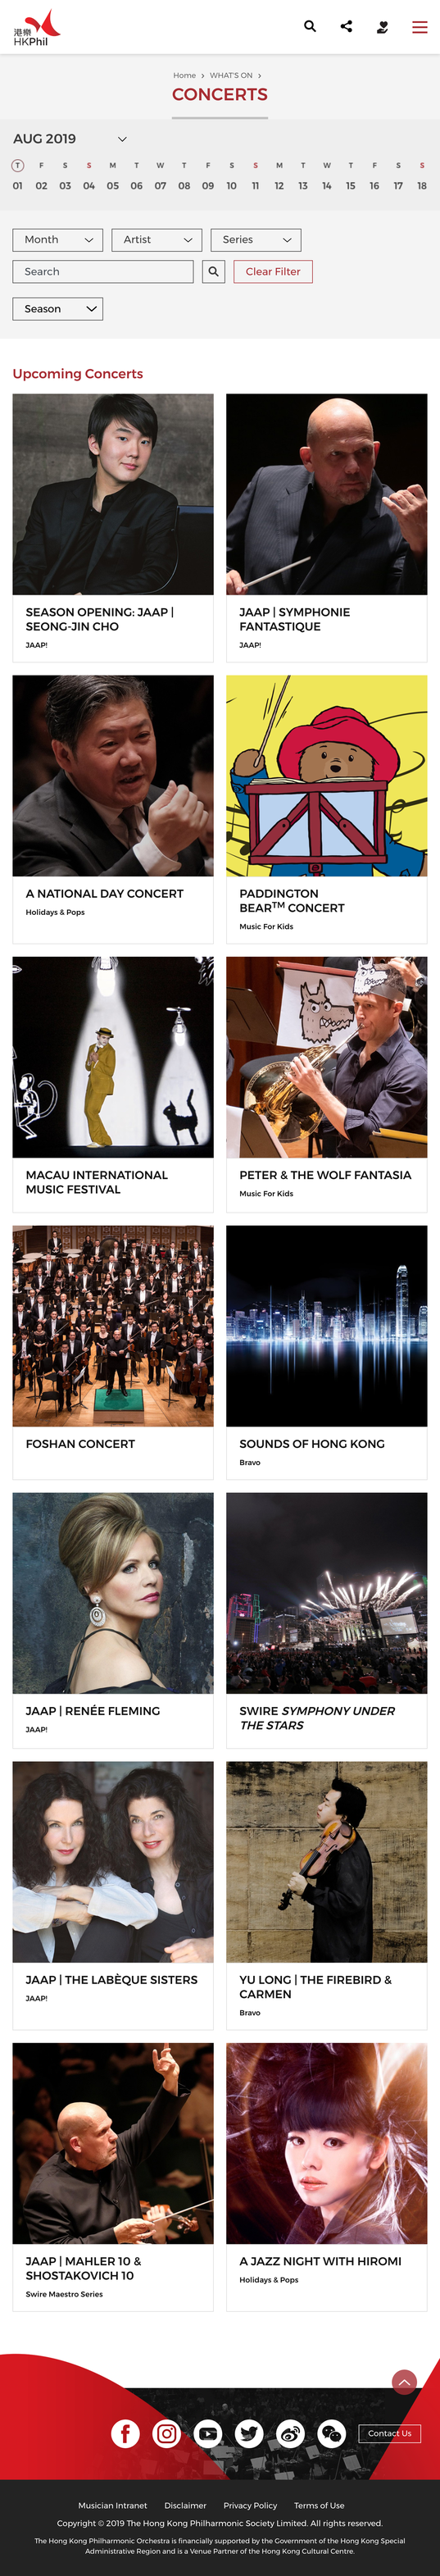 Hong Kong Philharmonic  website screenshot for tablet version 2 of 4